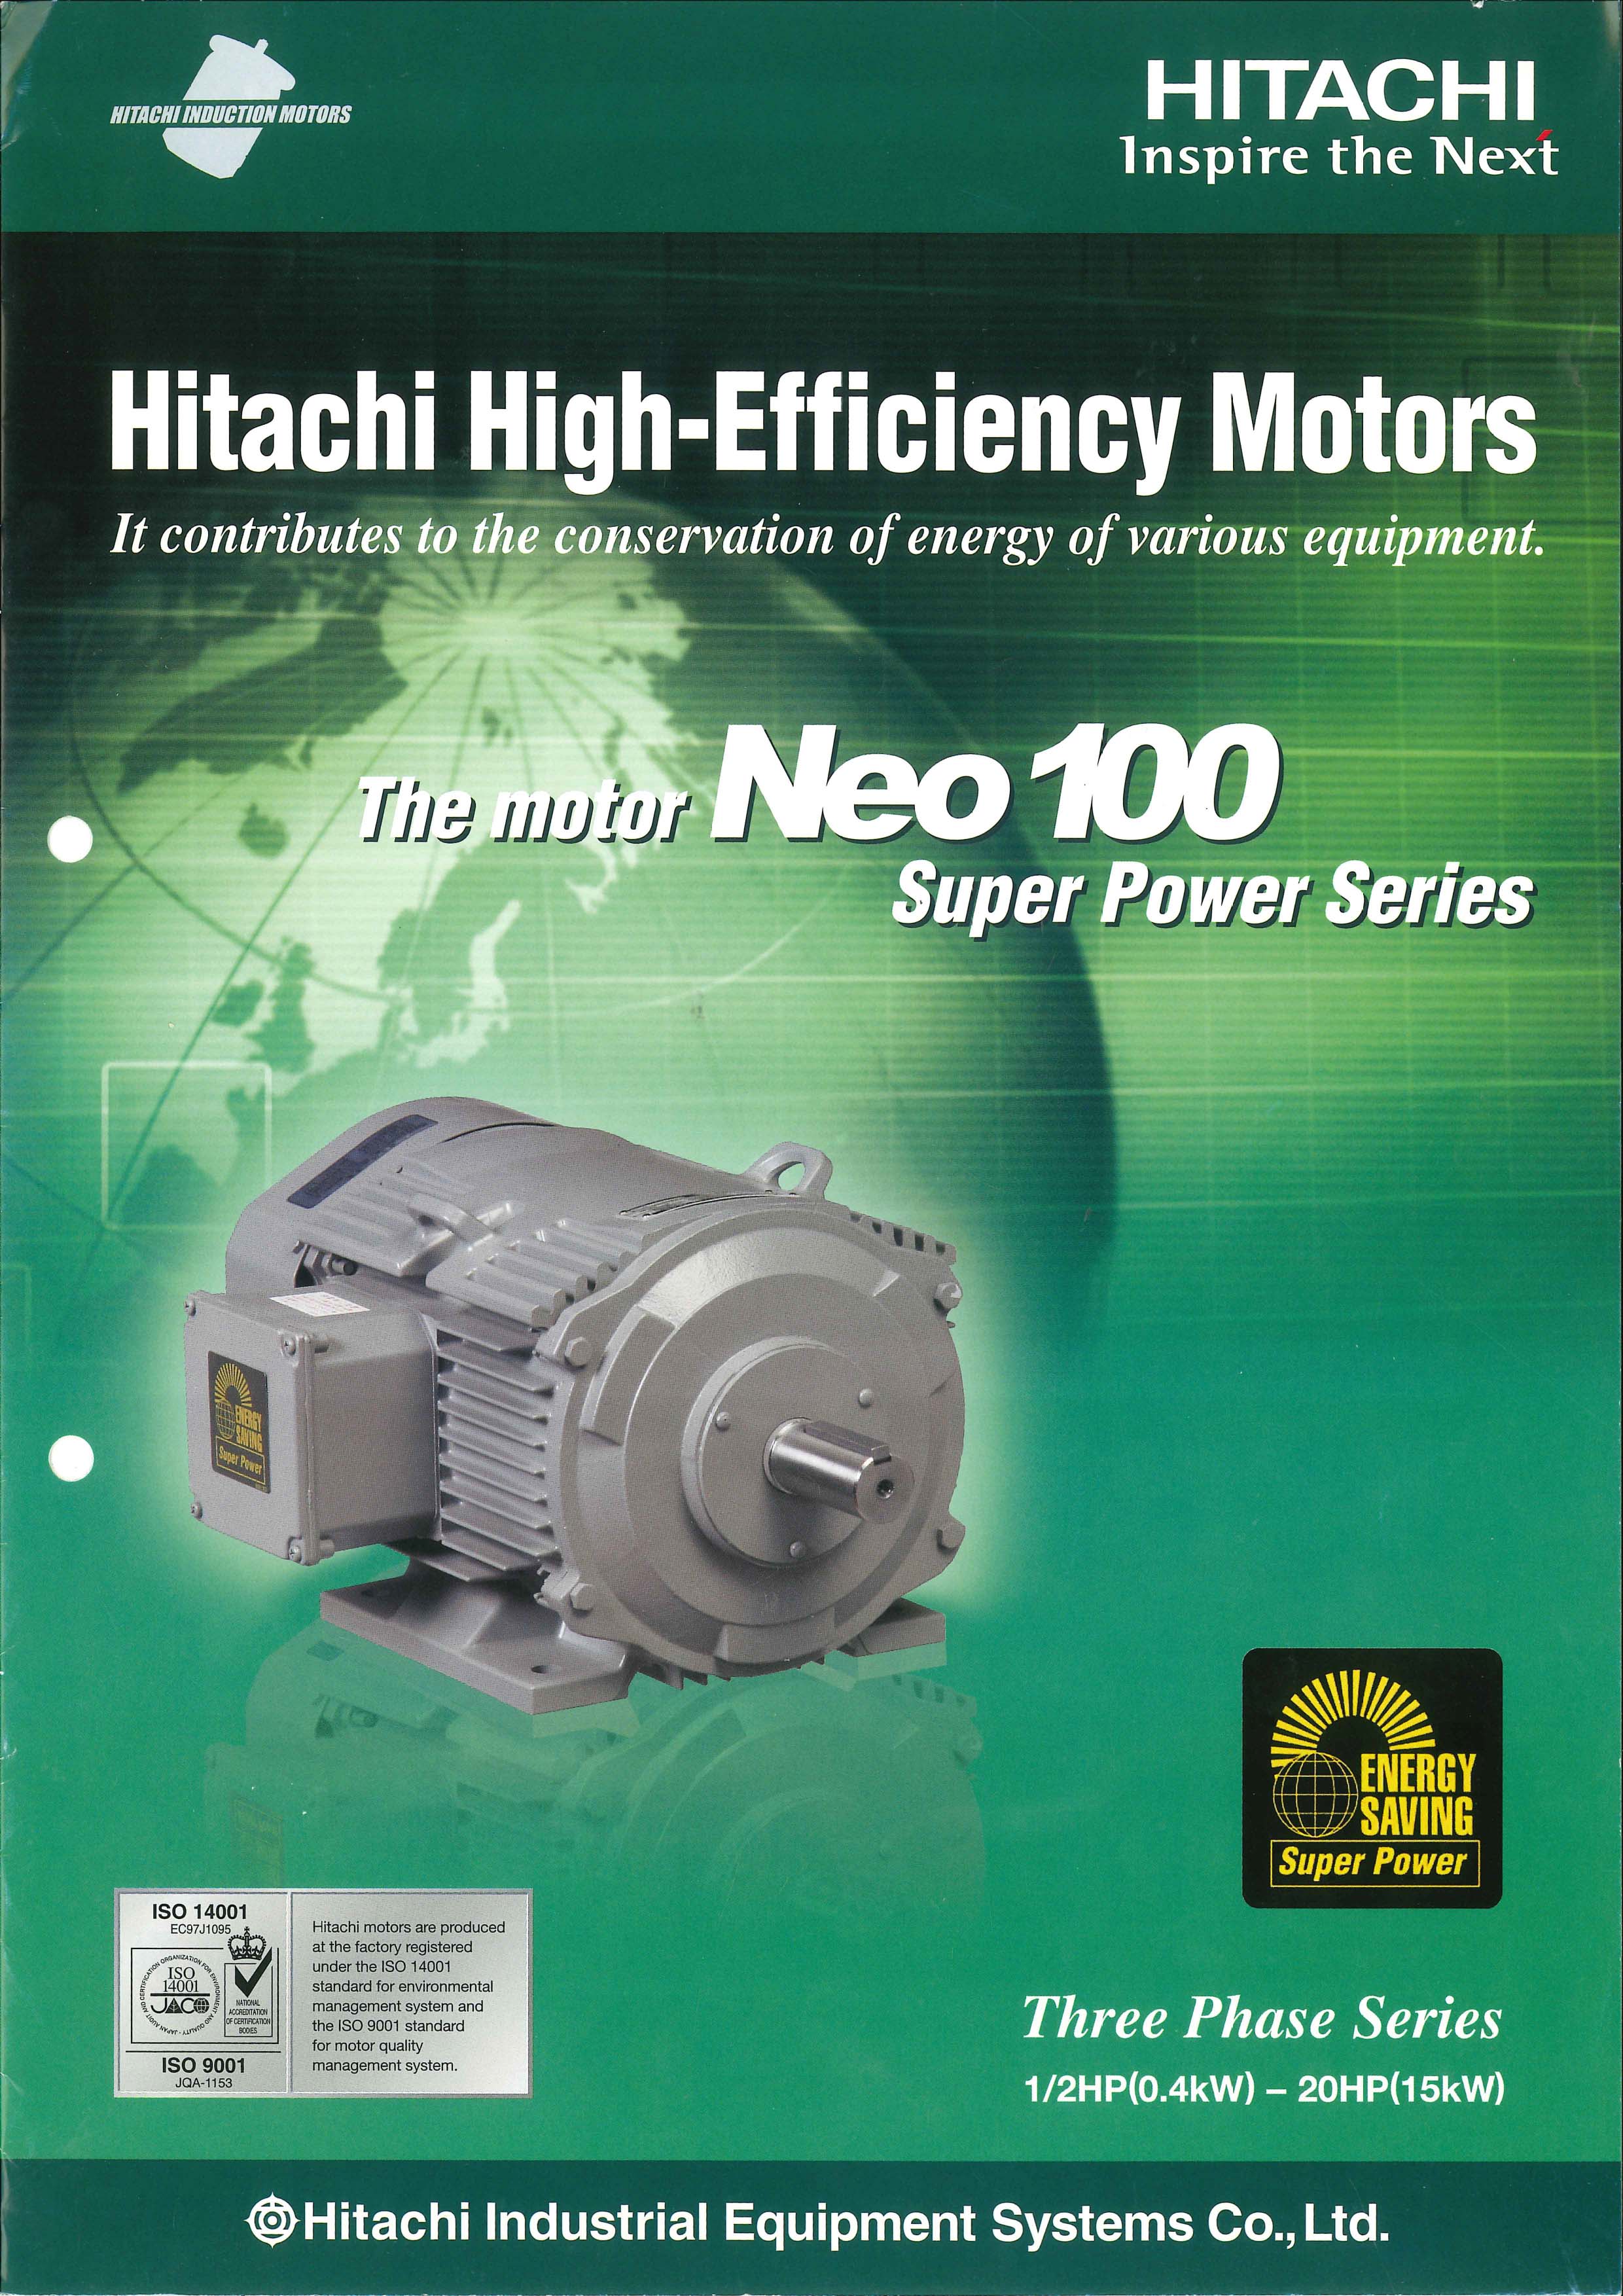 HITACHI - THE MOTOR NEO 100 SUPER POWER SERIES